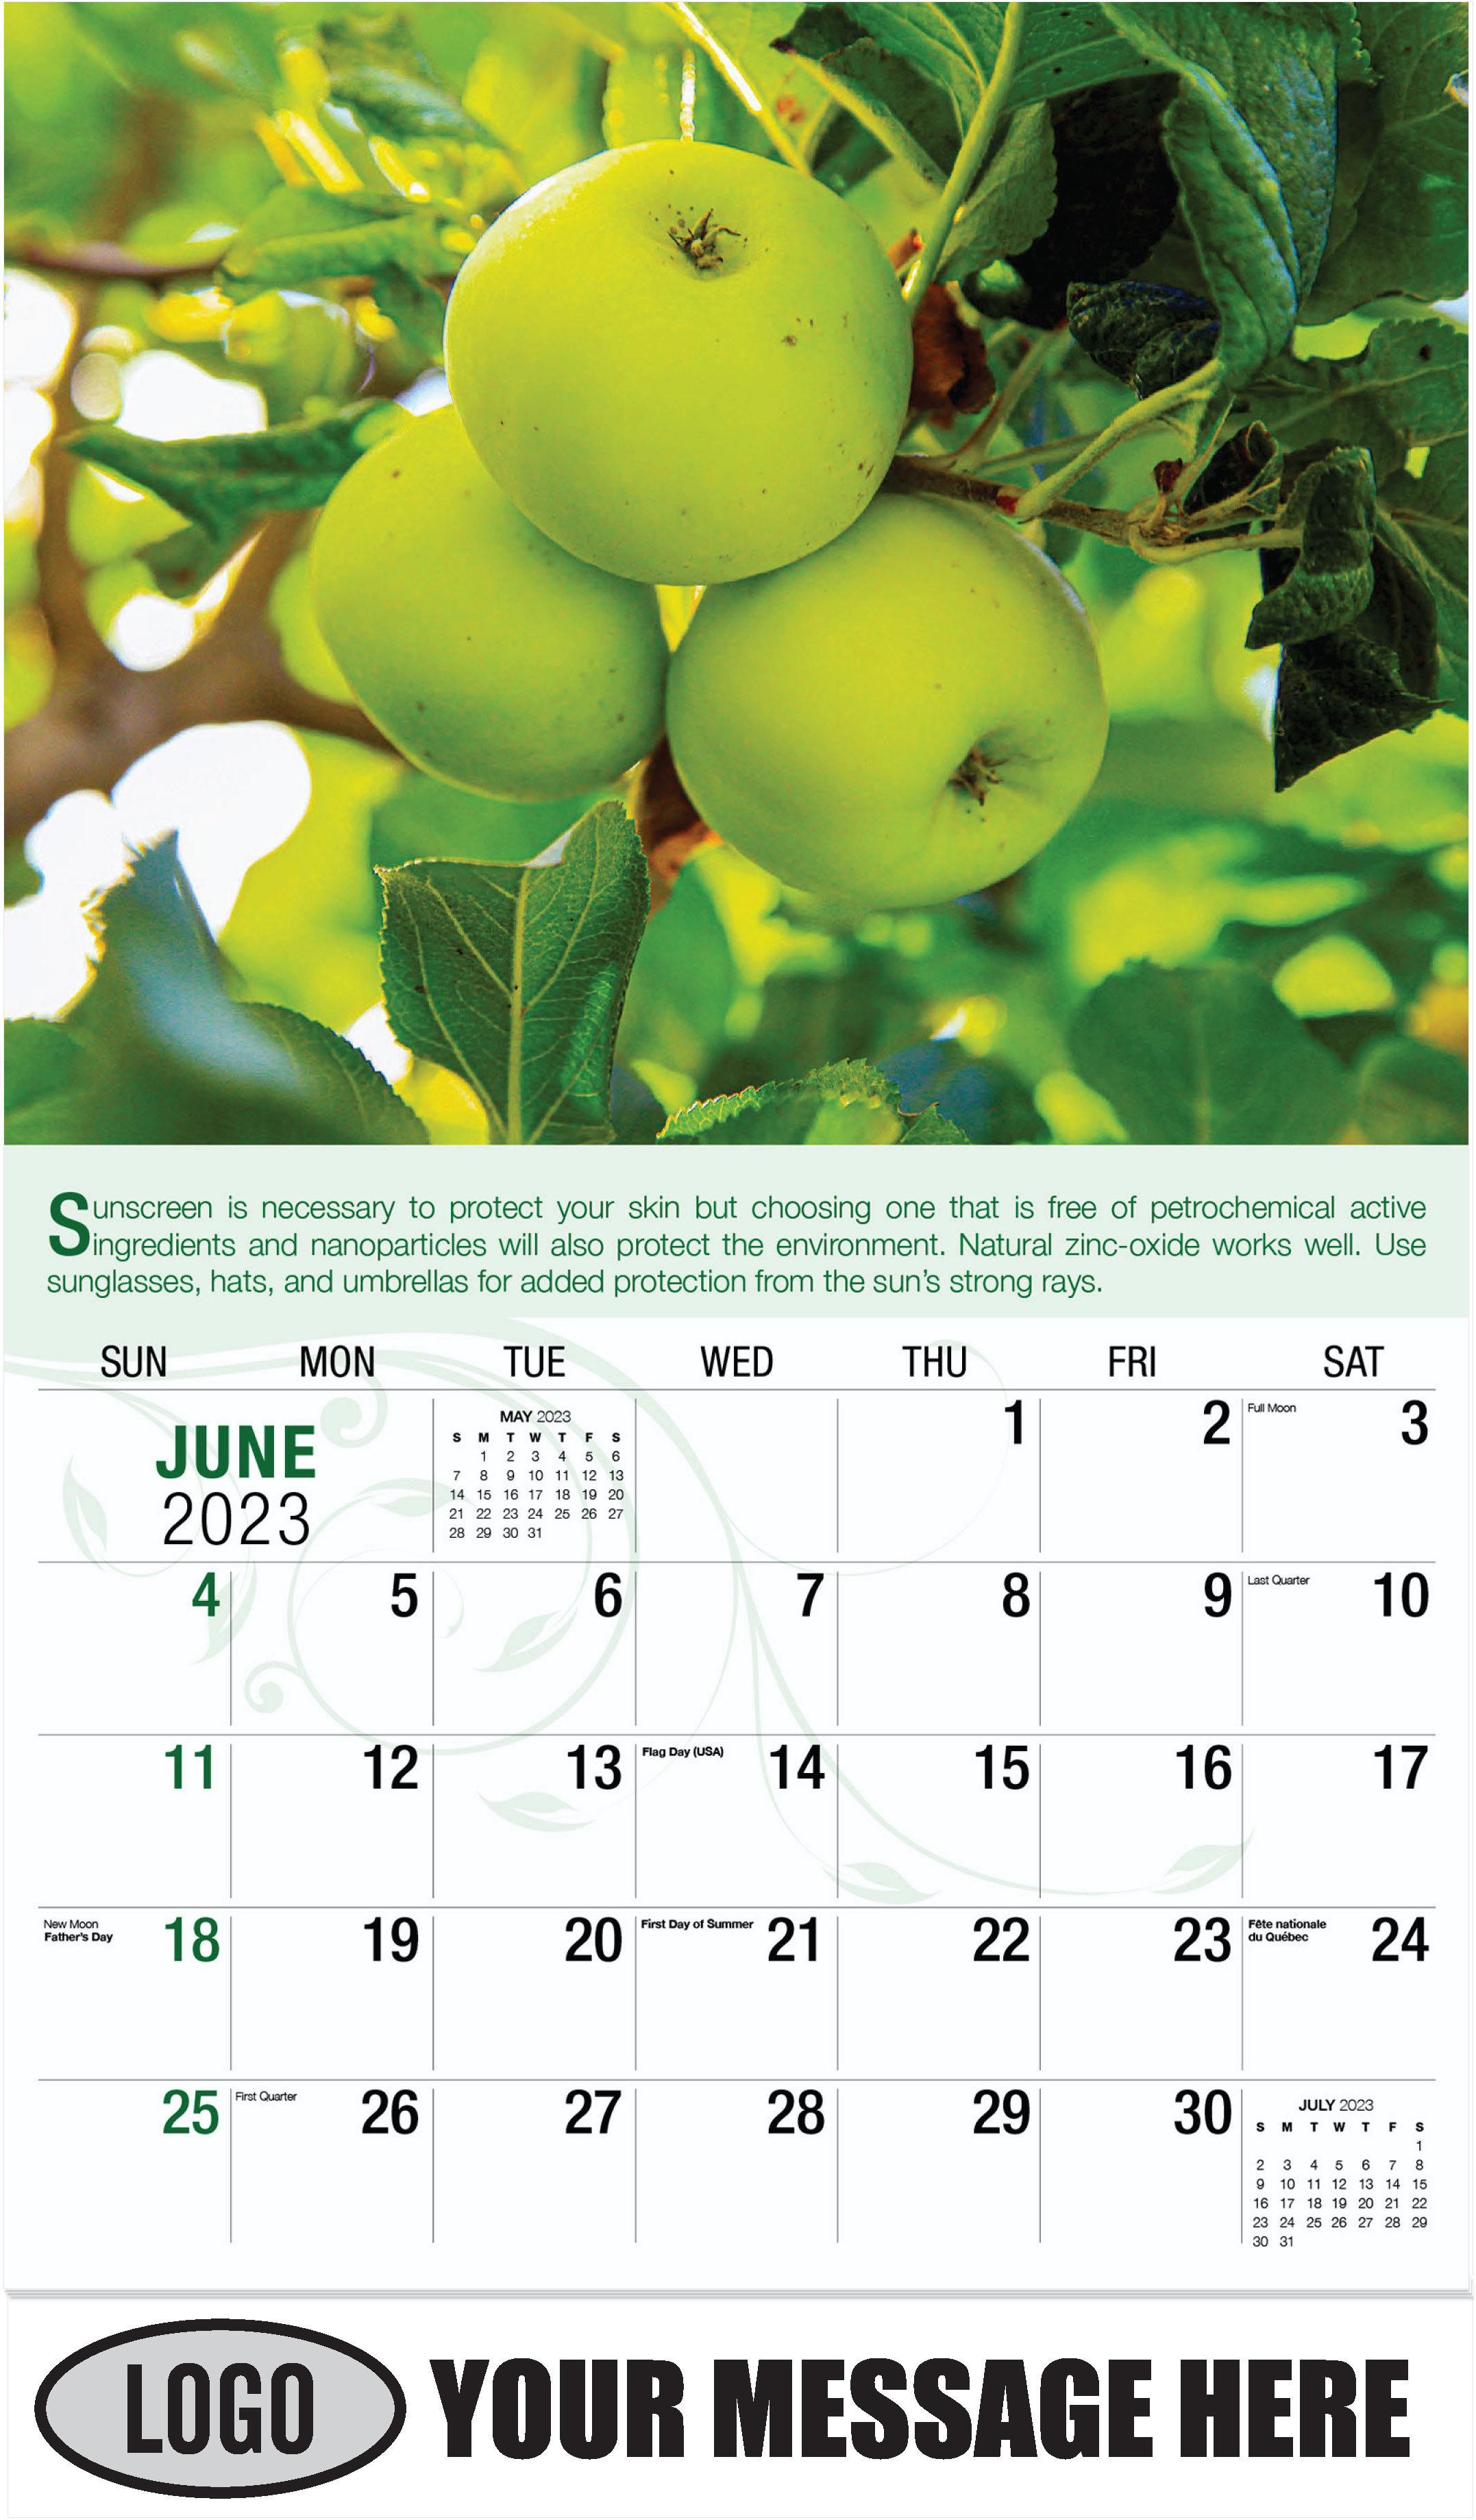 Green Apples - June - Go Green 2023 Promotional Calendar